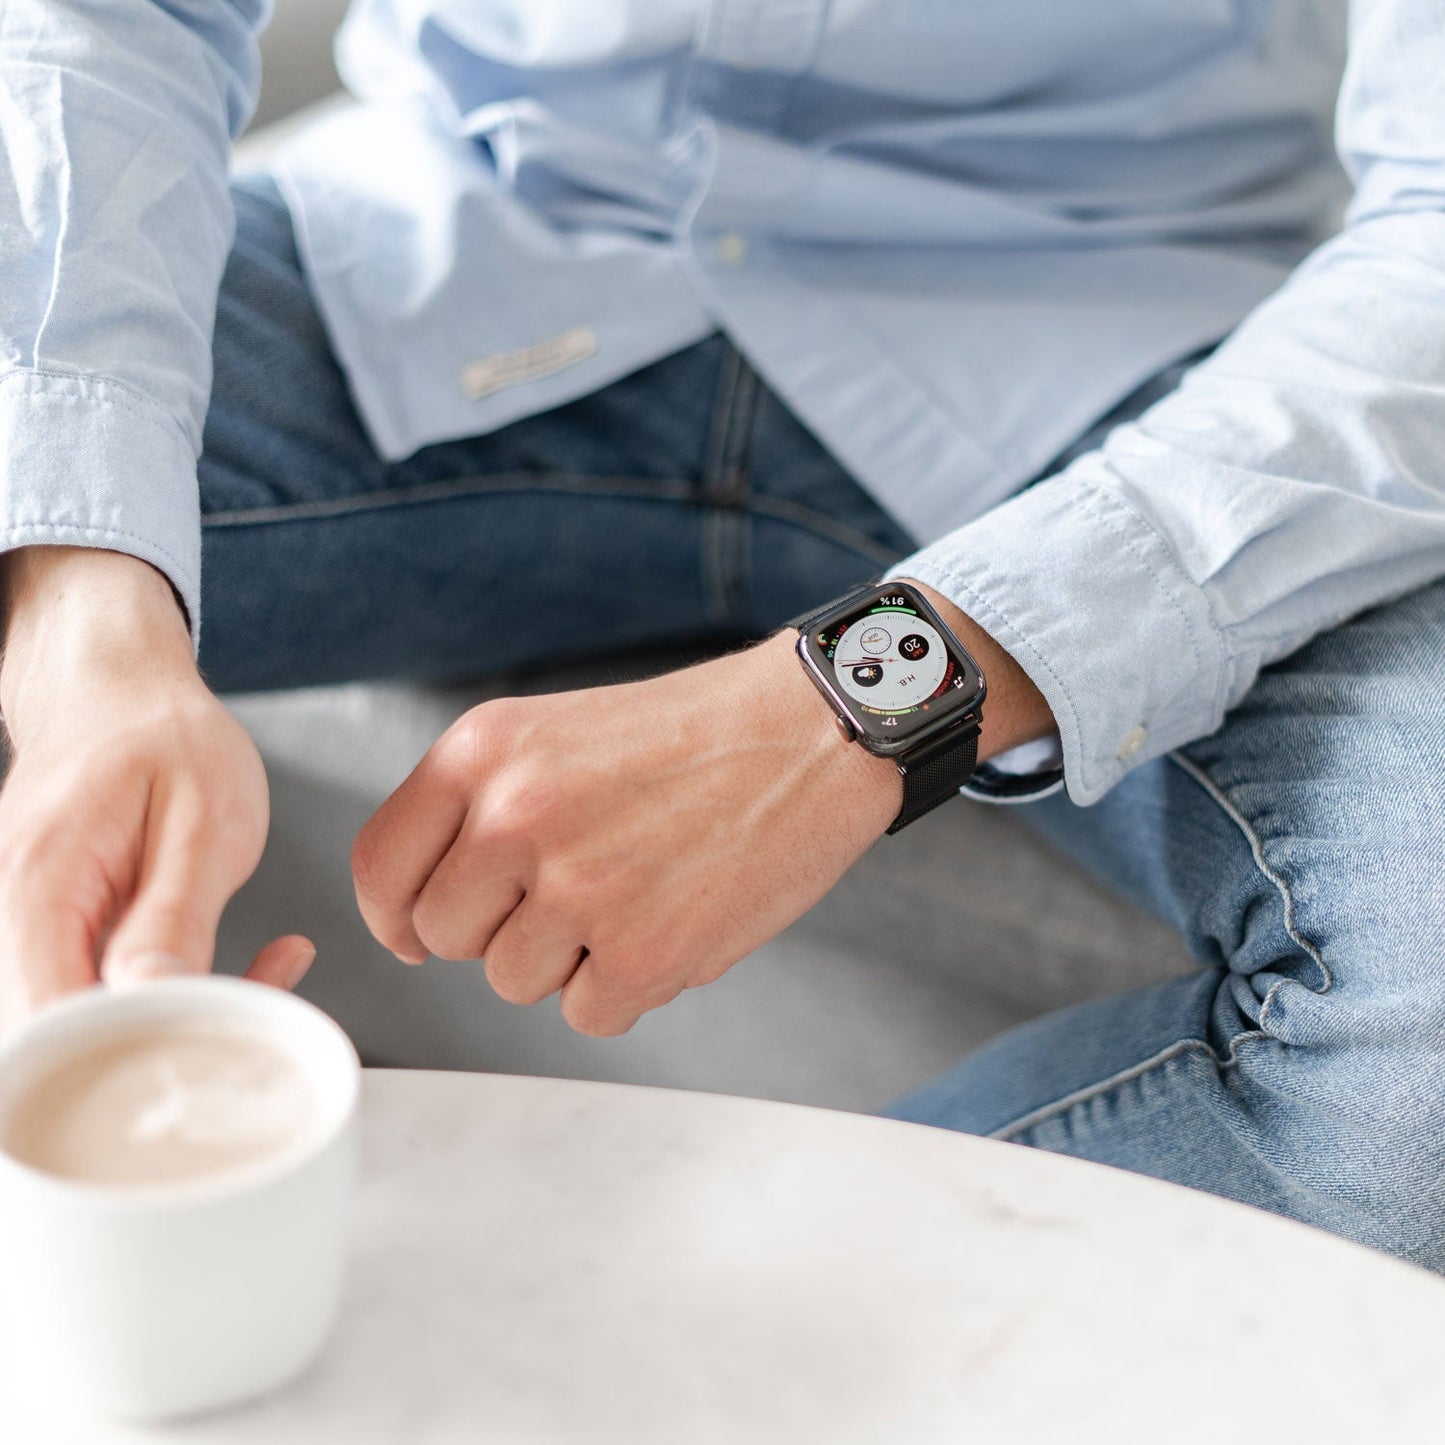 arktisband Apple Watch Milanaise Loop Armband